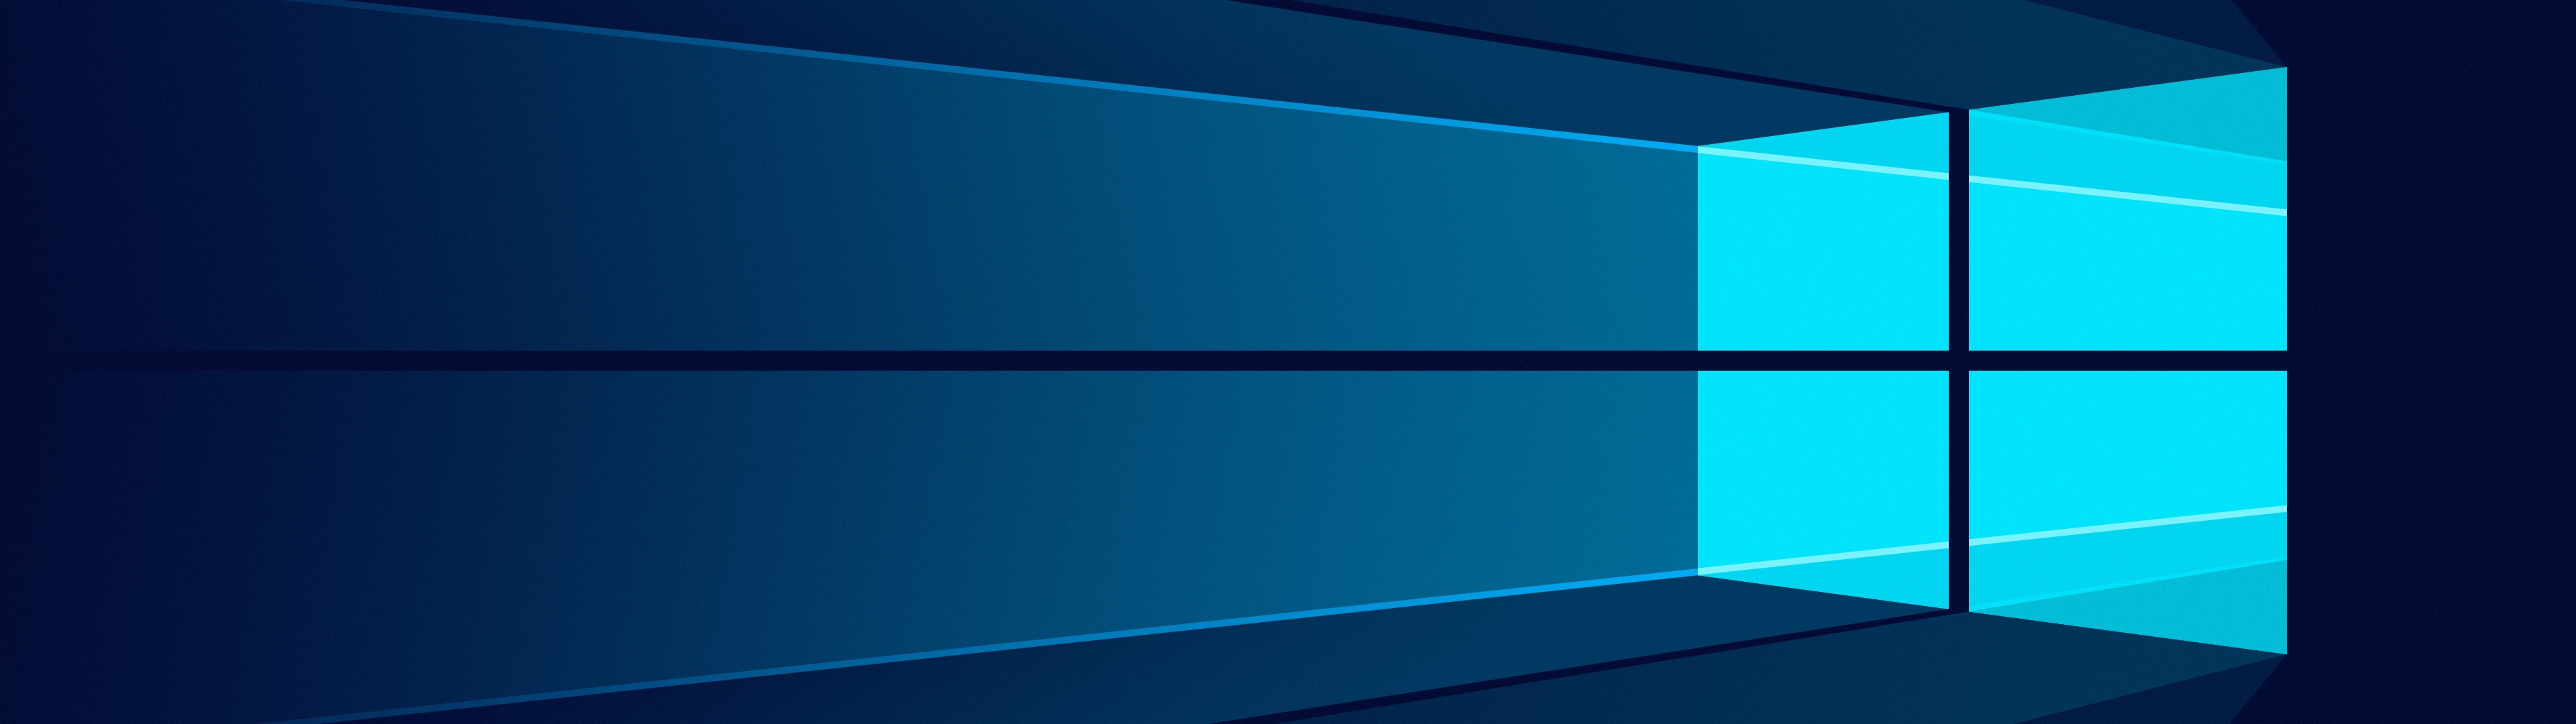 Windows 10 Wallpaper 4K, Microsoft Windows, Technology, #1557